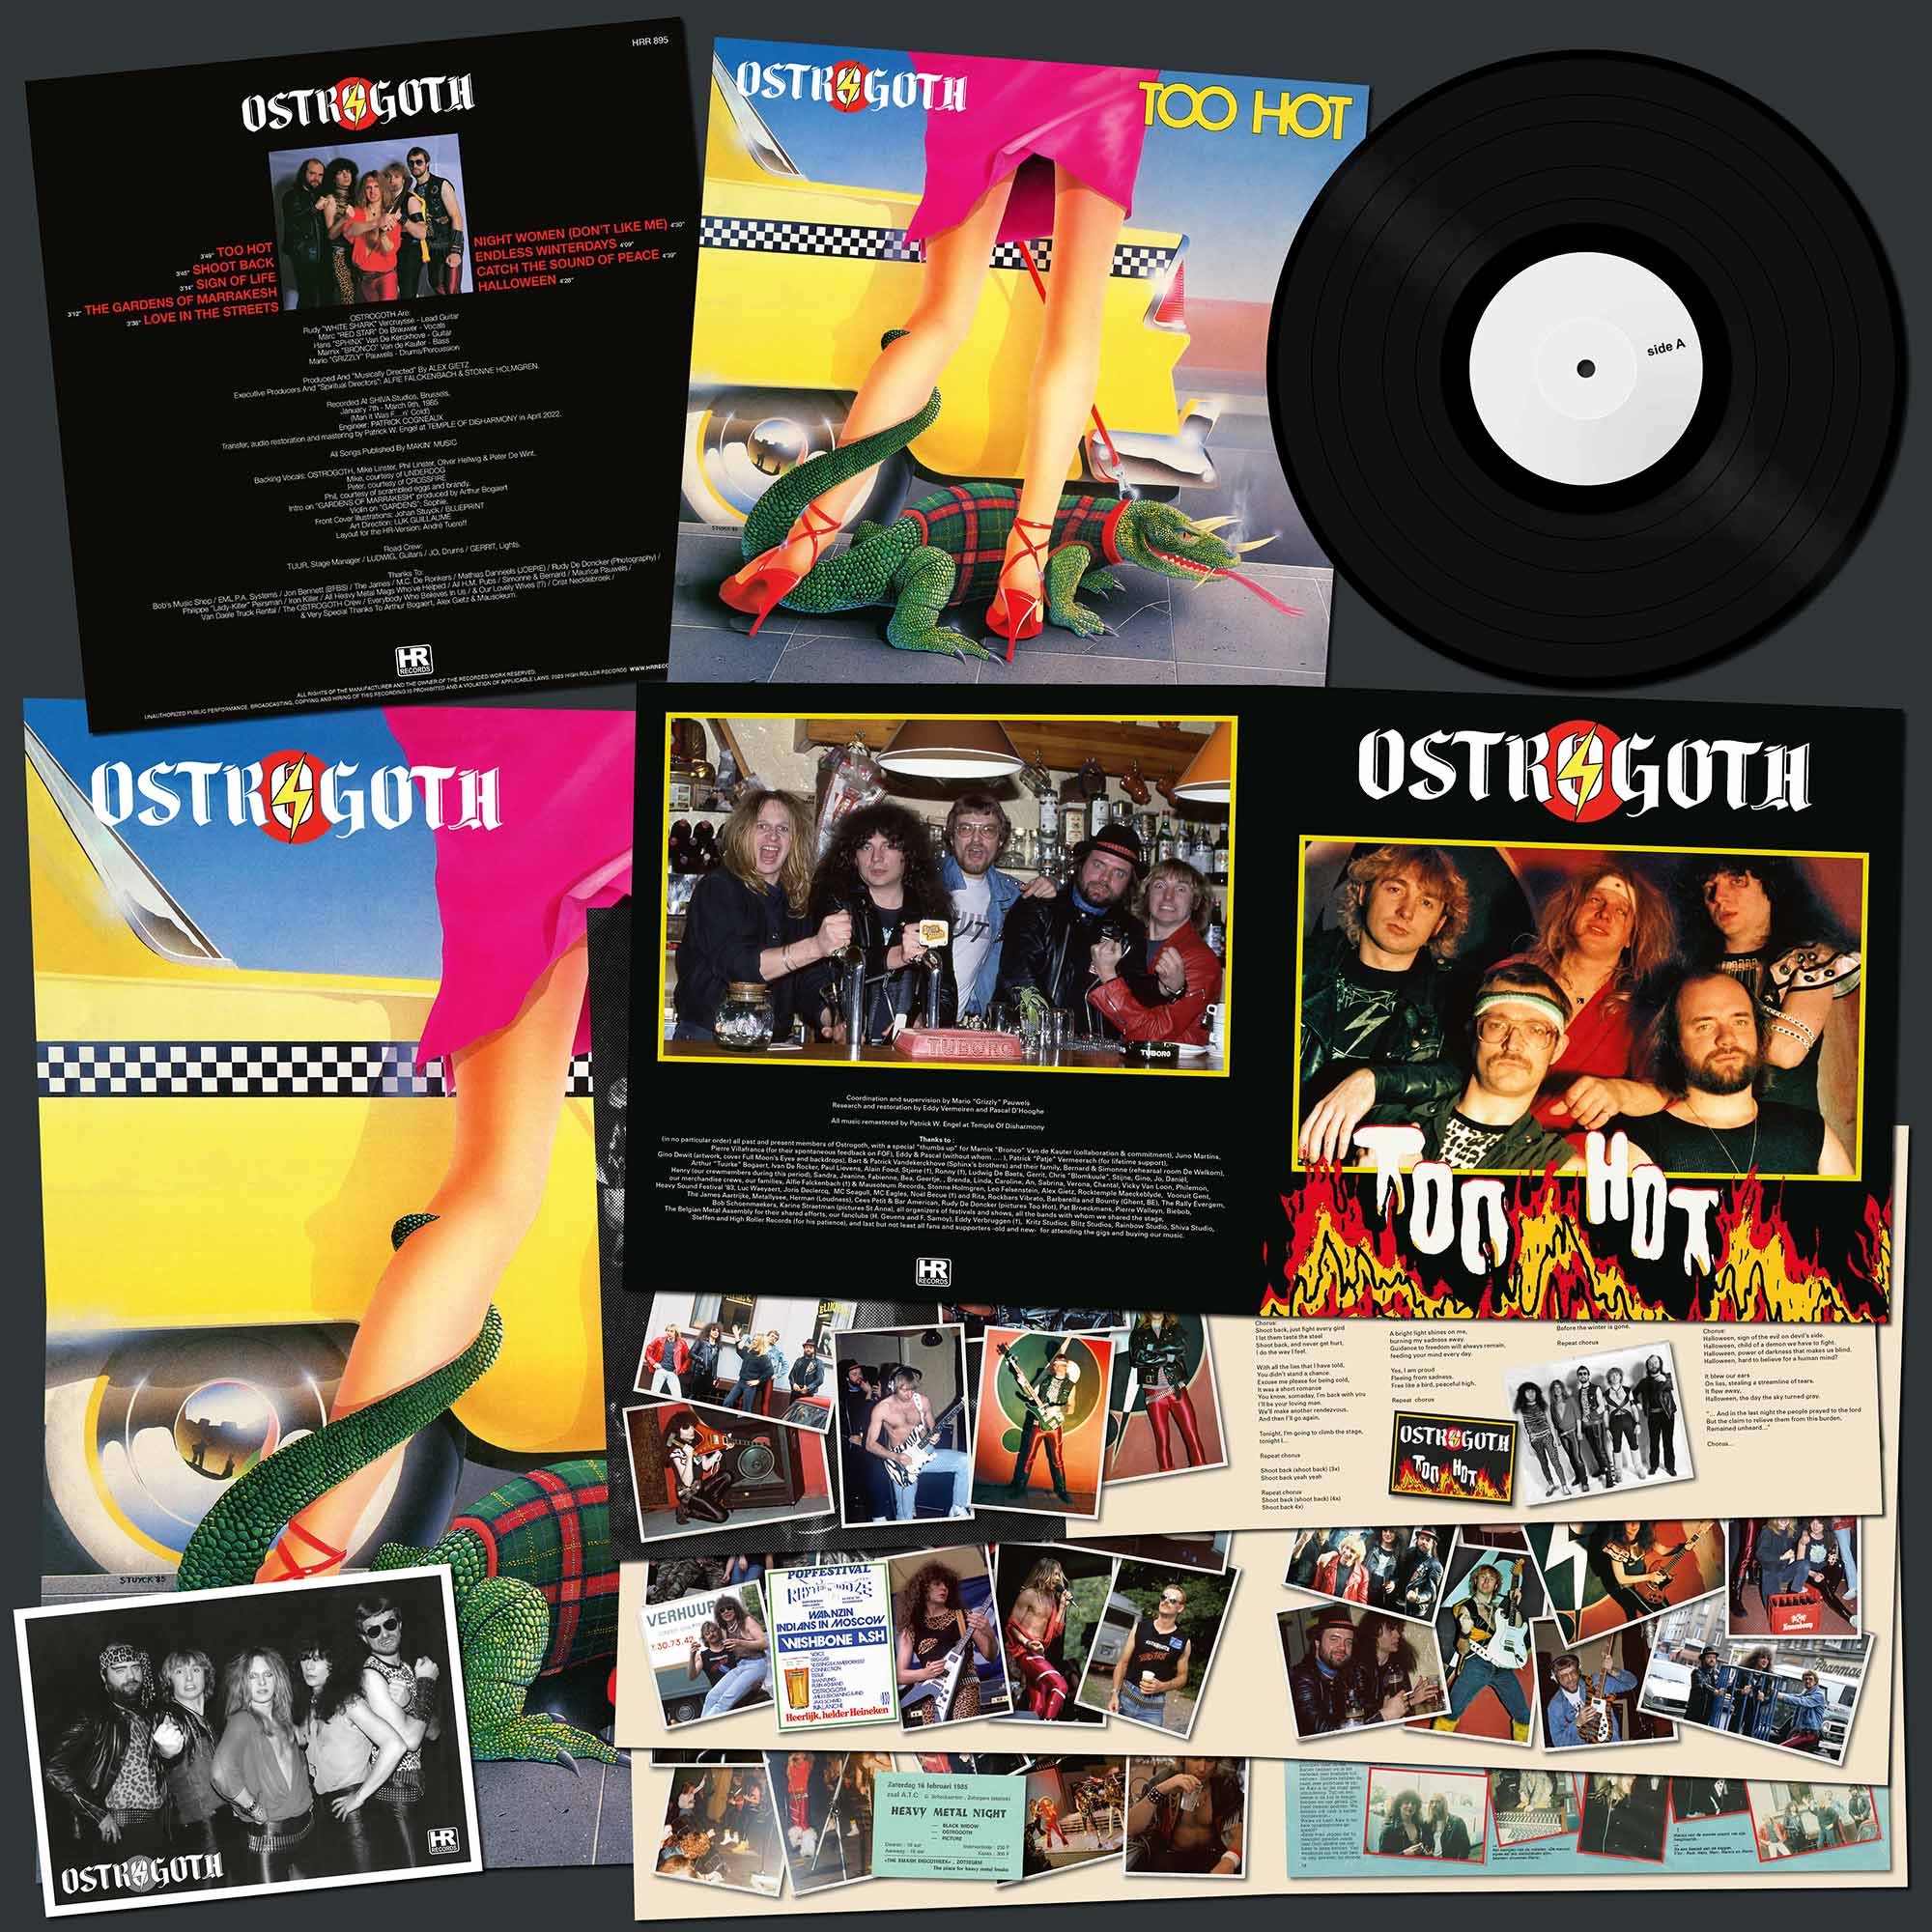 OSTROGOTH - Too Hot  LP